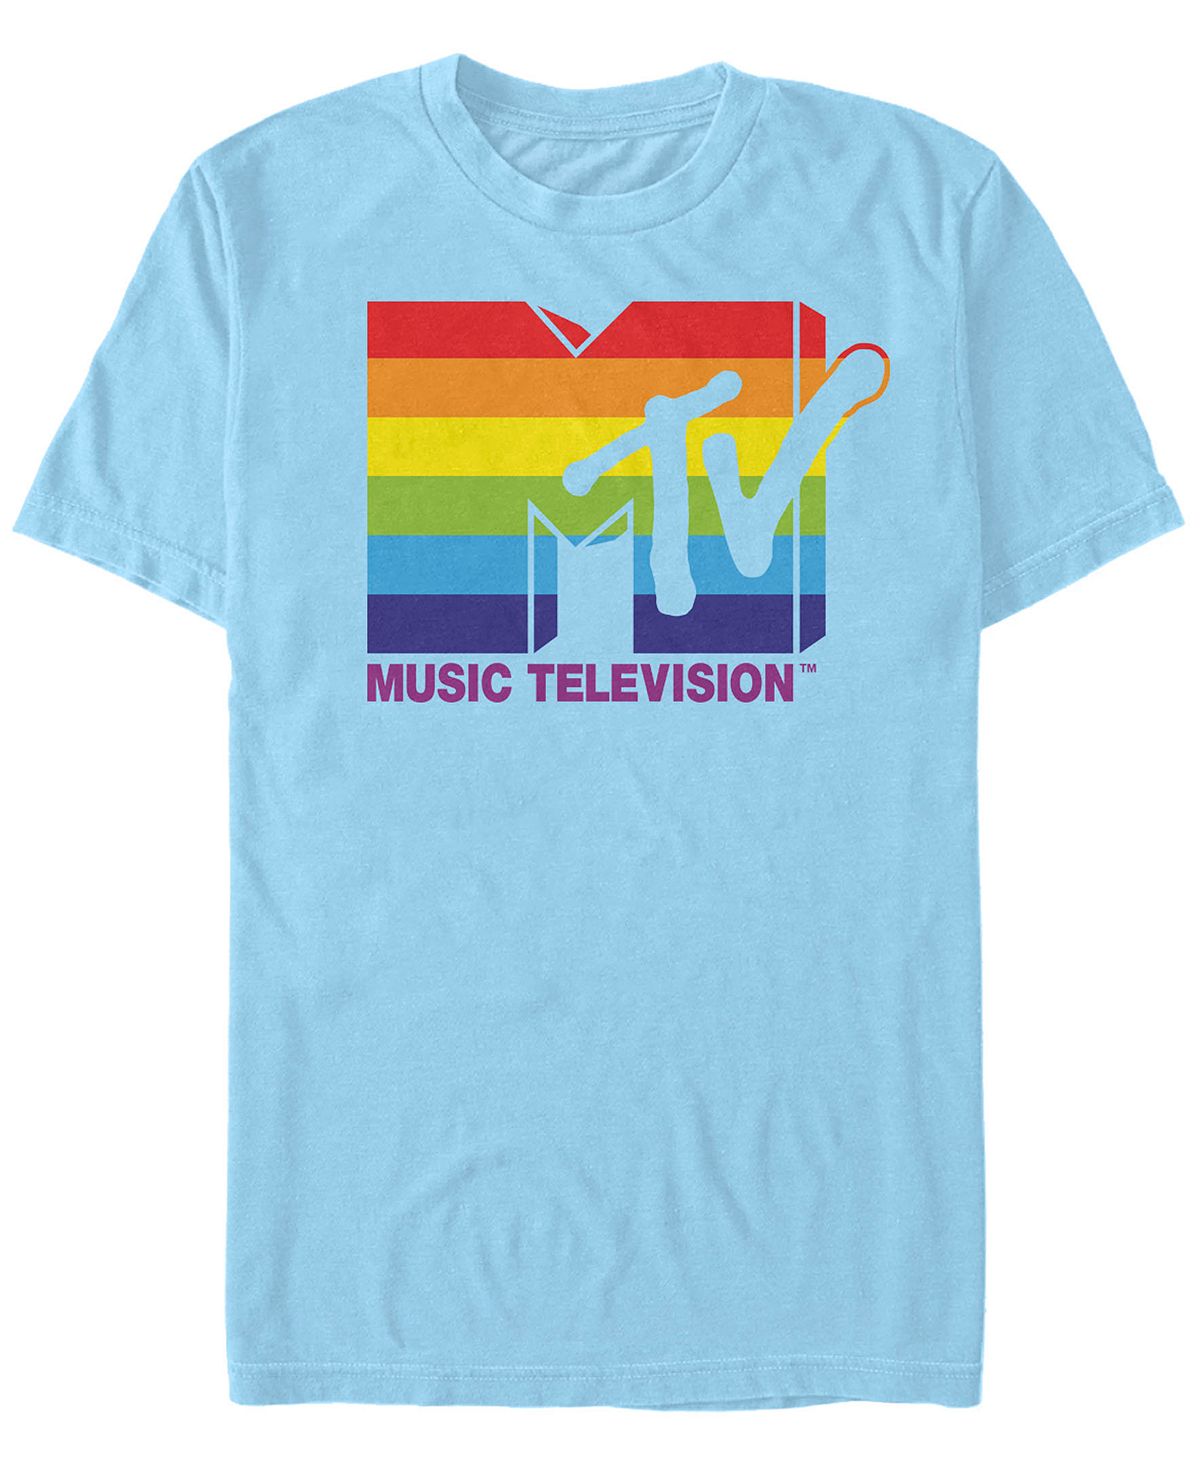 Мужская футболка с коротким рукавом с логотипом rainbow pride Fifth Sun, голубой пульт для телевизора bbk rc3229 mystery mtv 1914lw